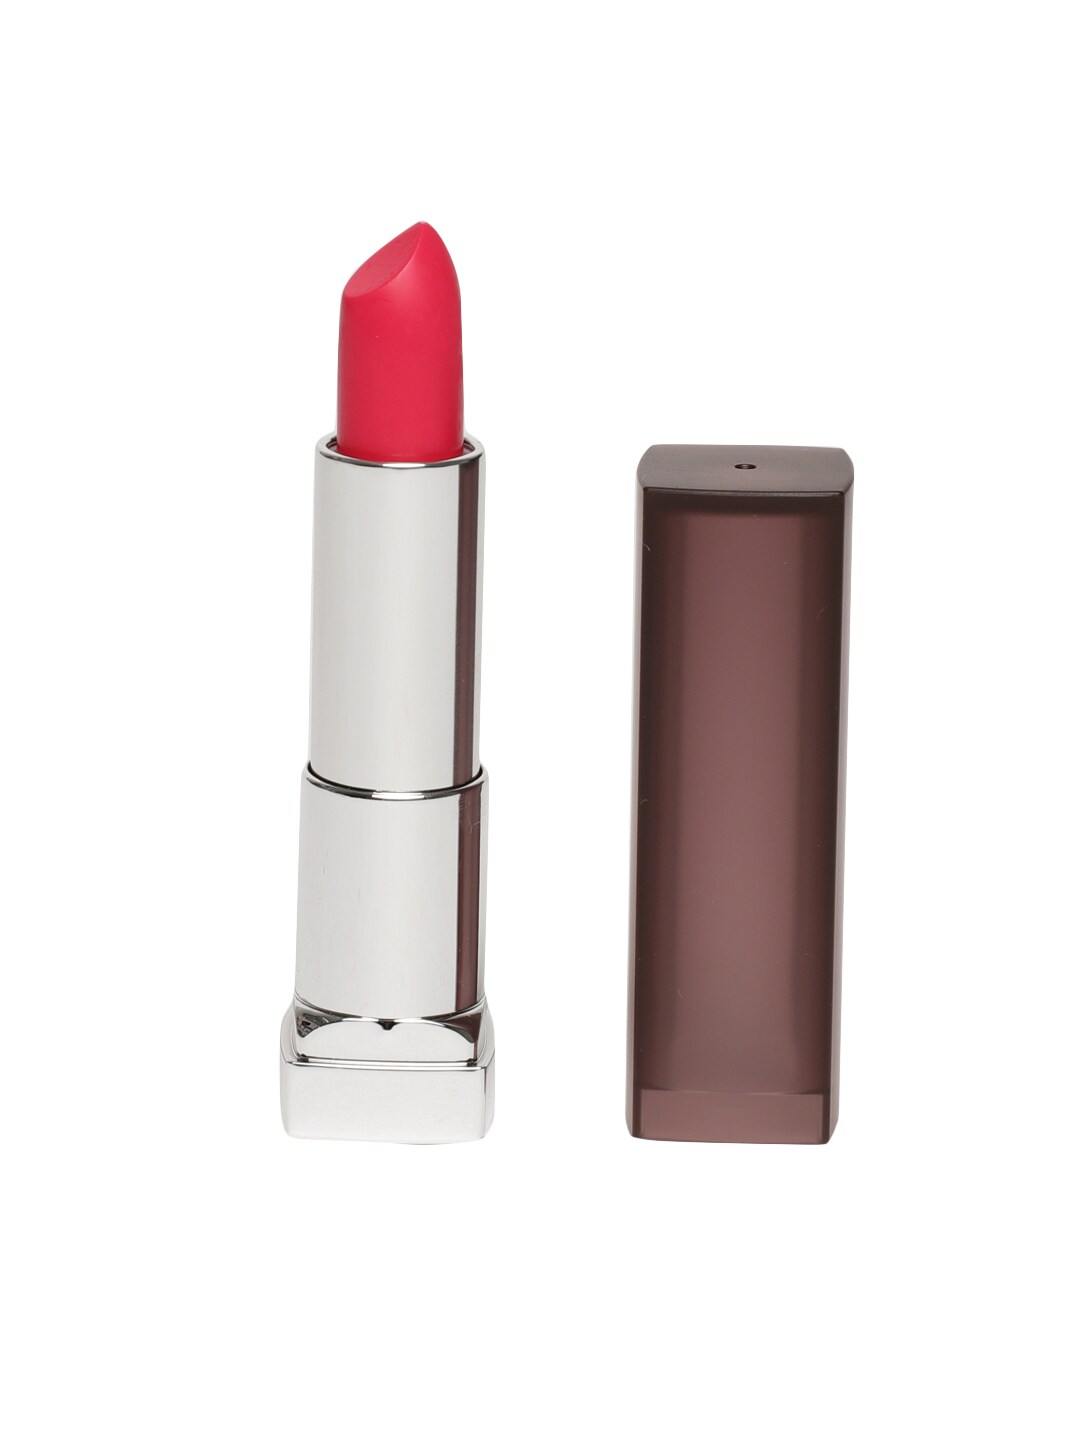 Maybelline New York Color Sensational Creamy Matte Lipstick - Flaming Fuchsia 630 Price in India